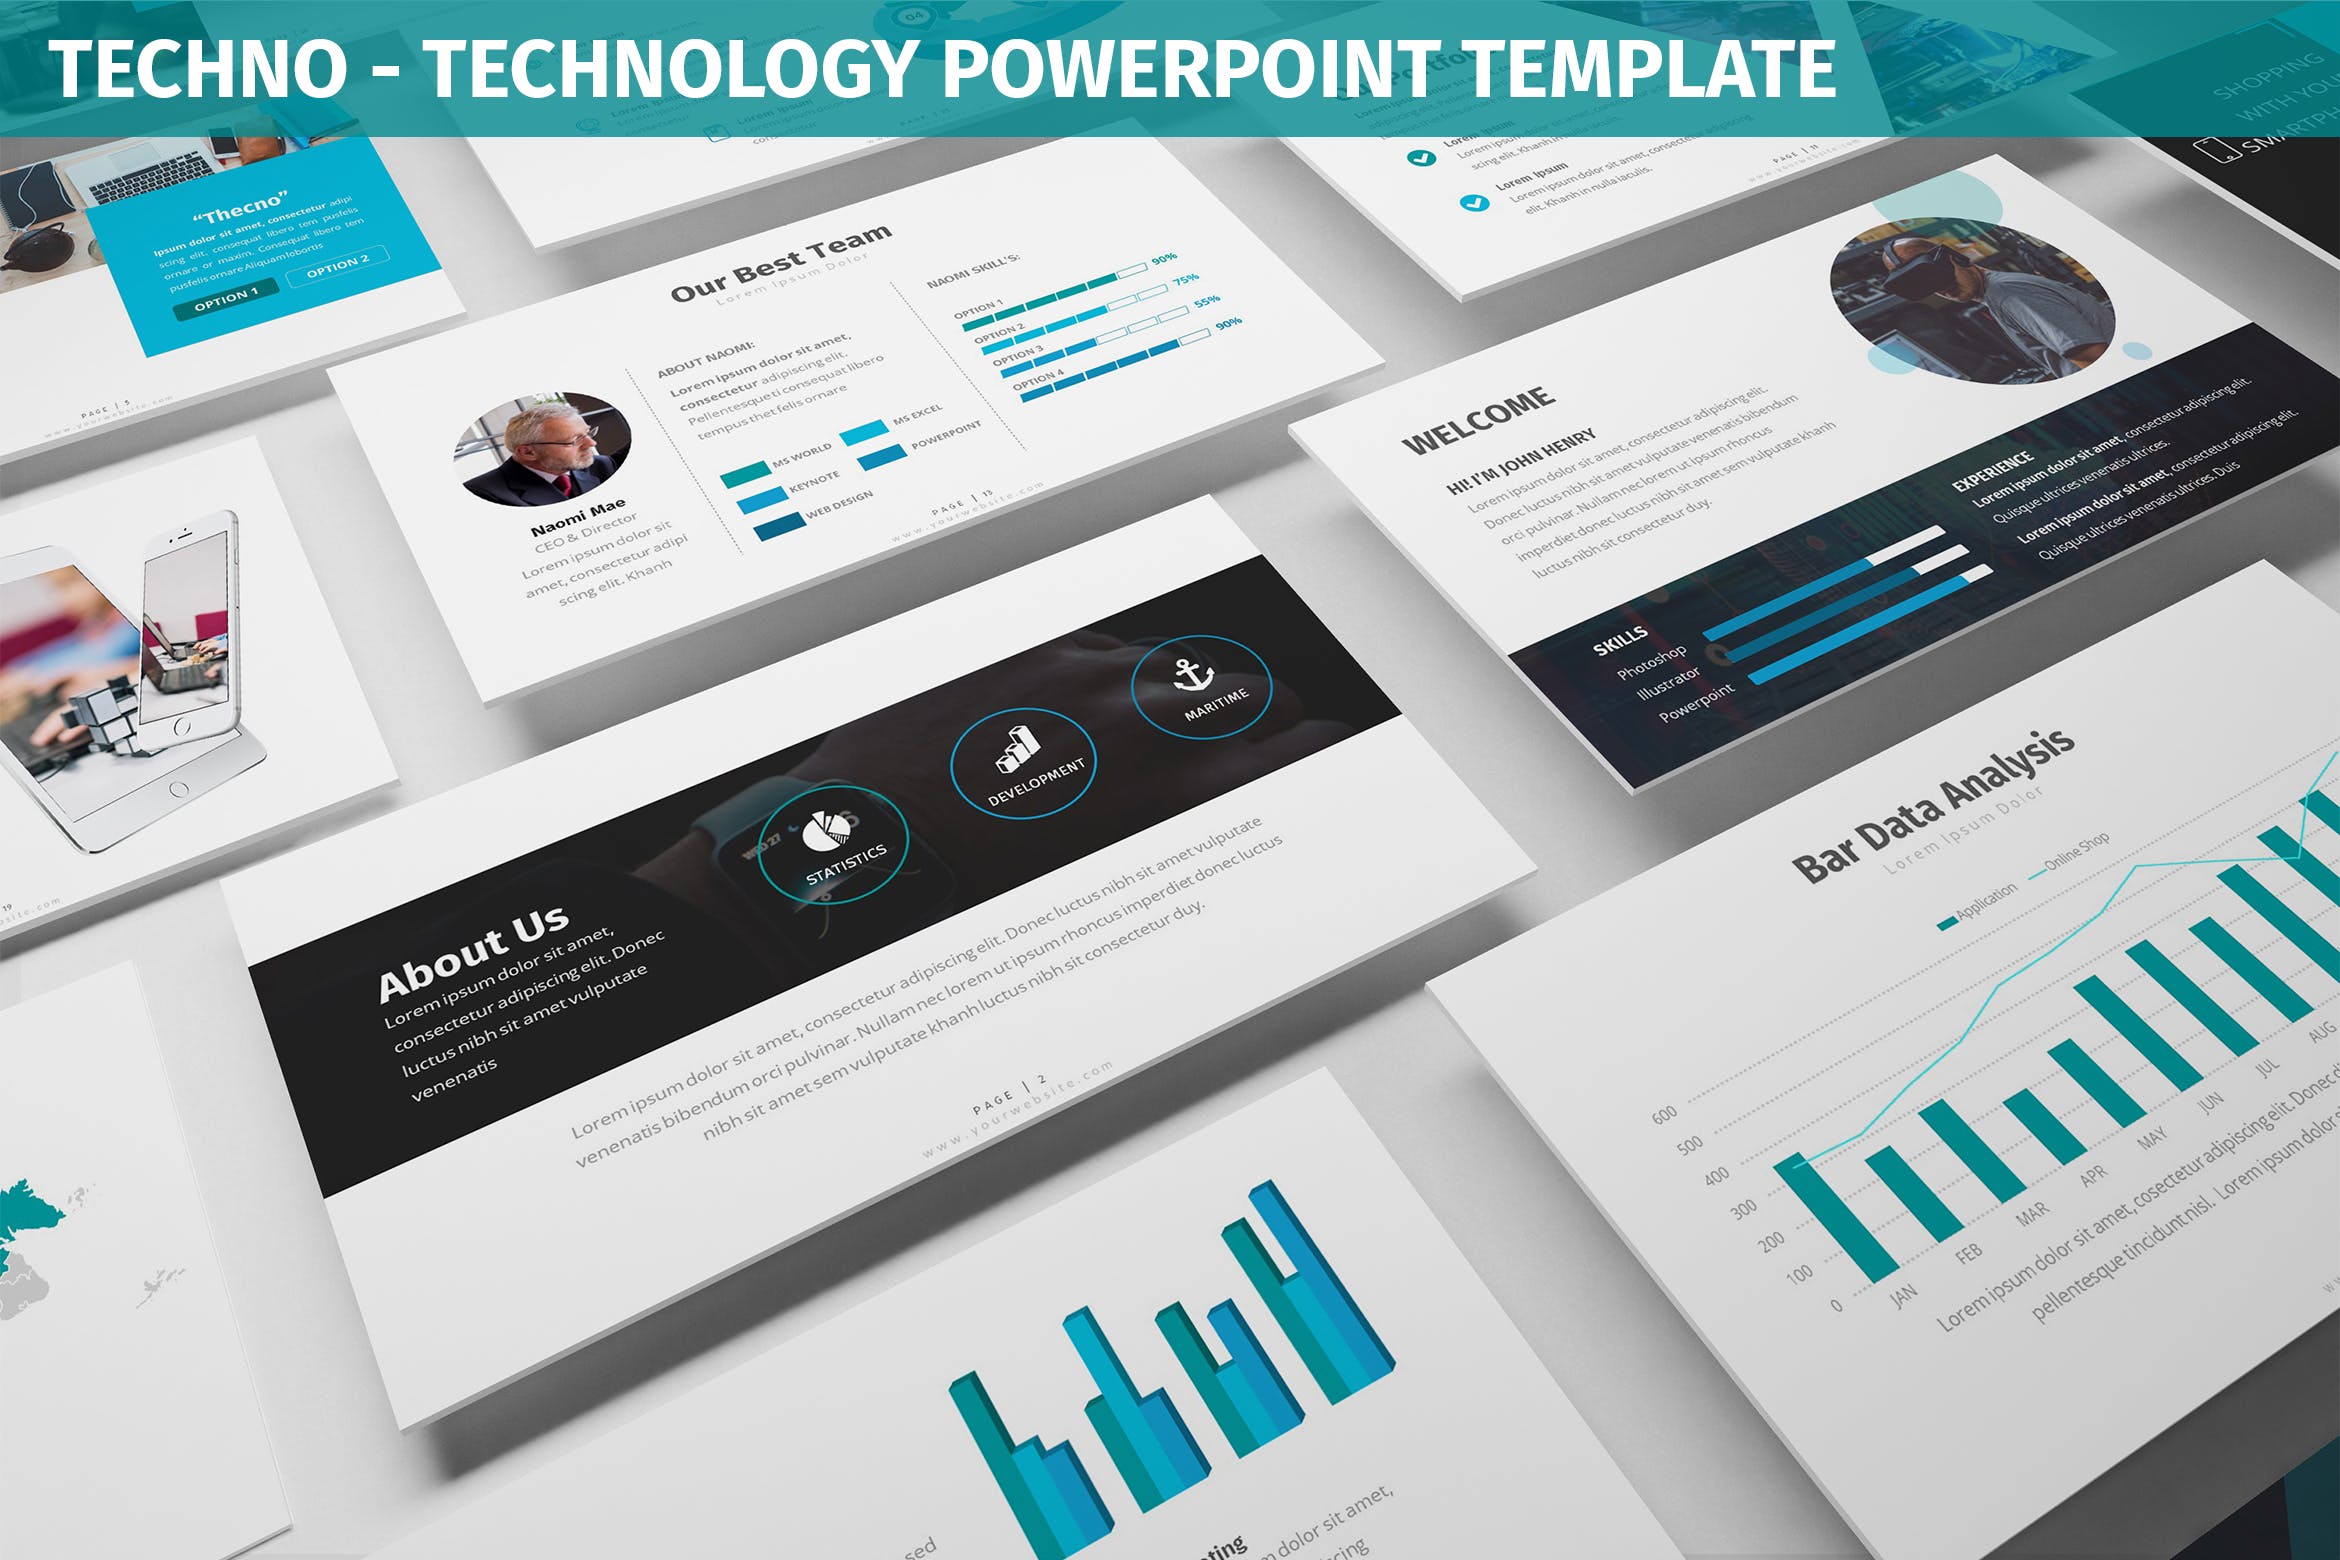 金融知识讲座PowerPoint演示模板 Techno – Technology Powerpoint Template